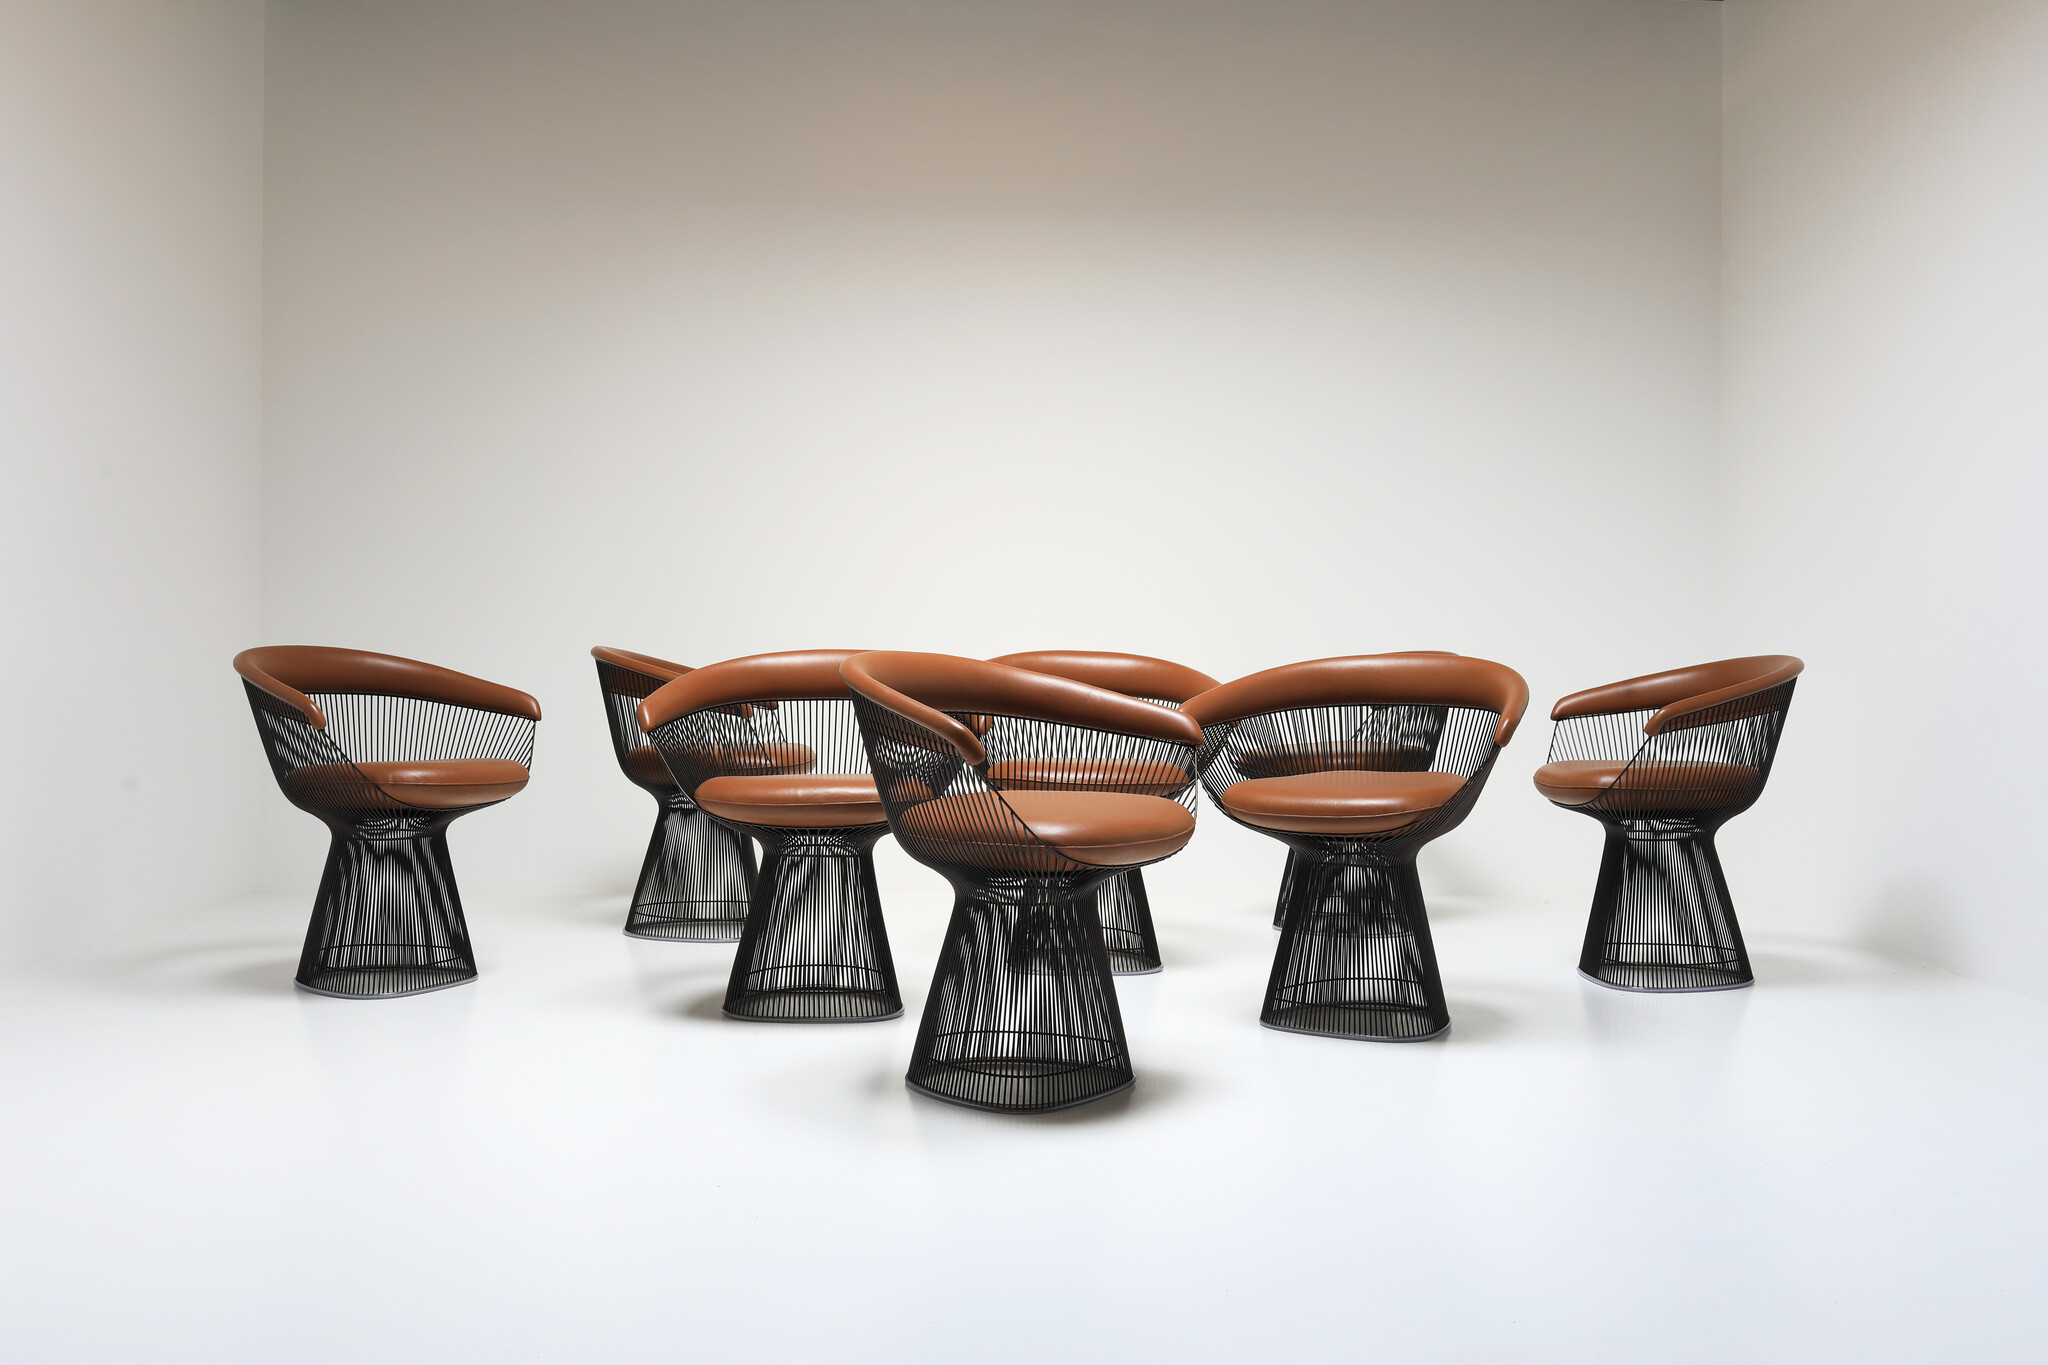 Rare Warren Platner chairs for Knoll.